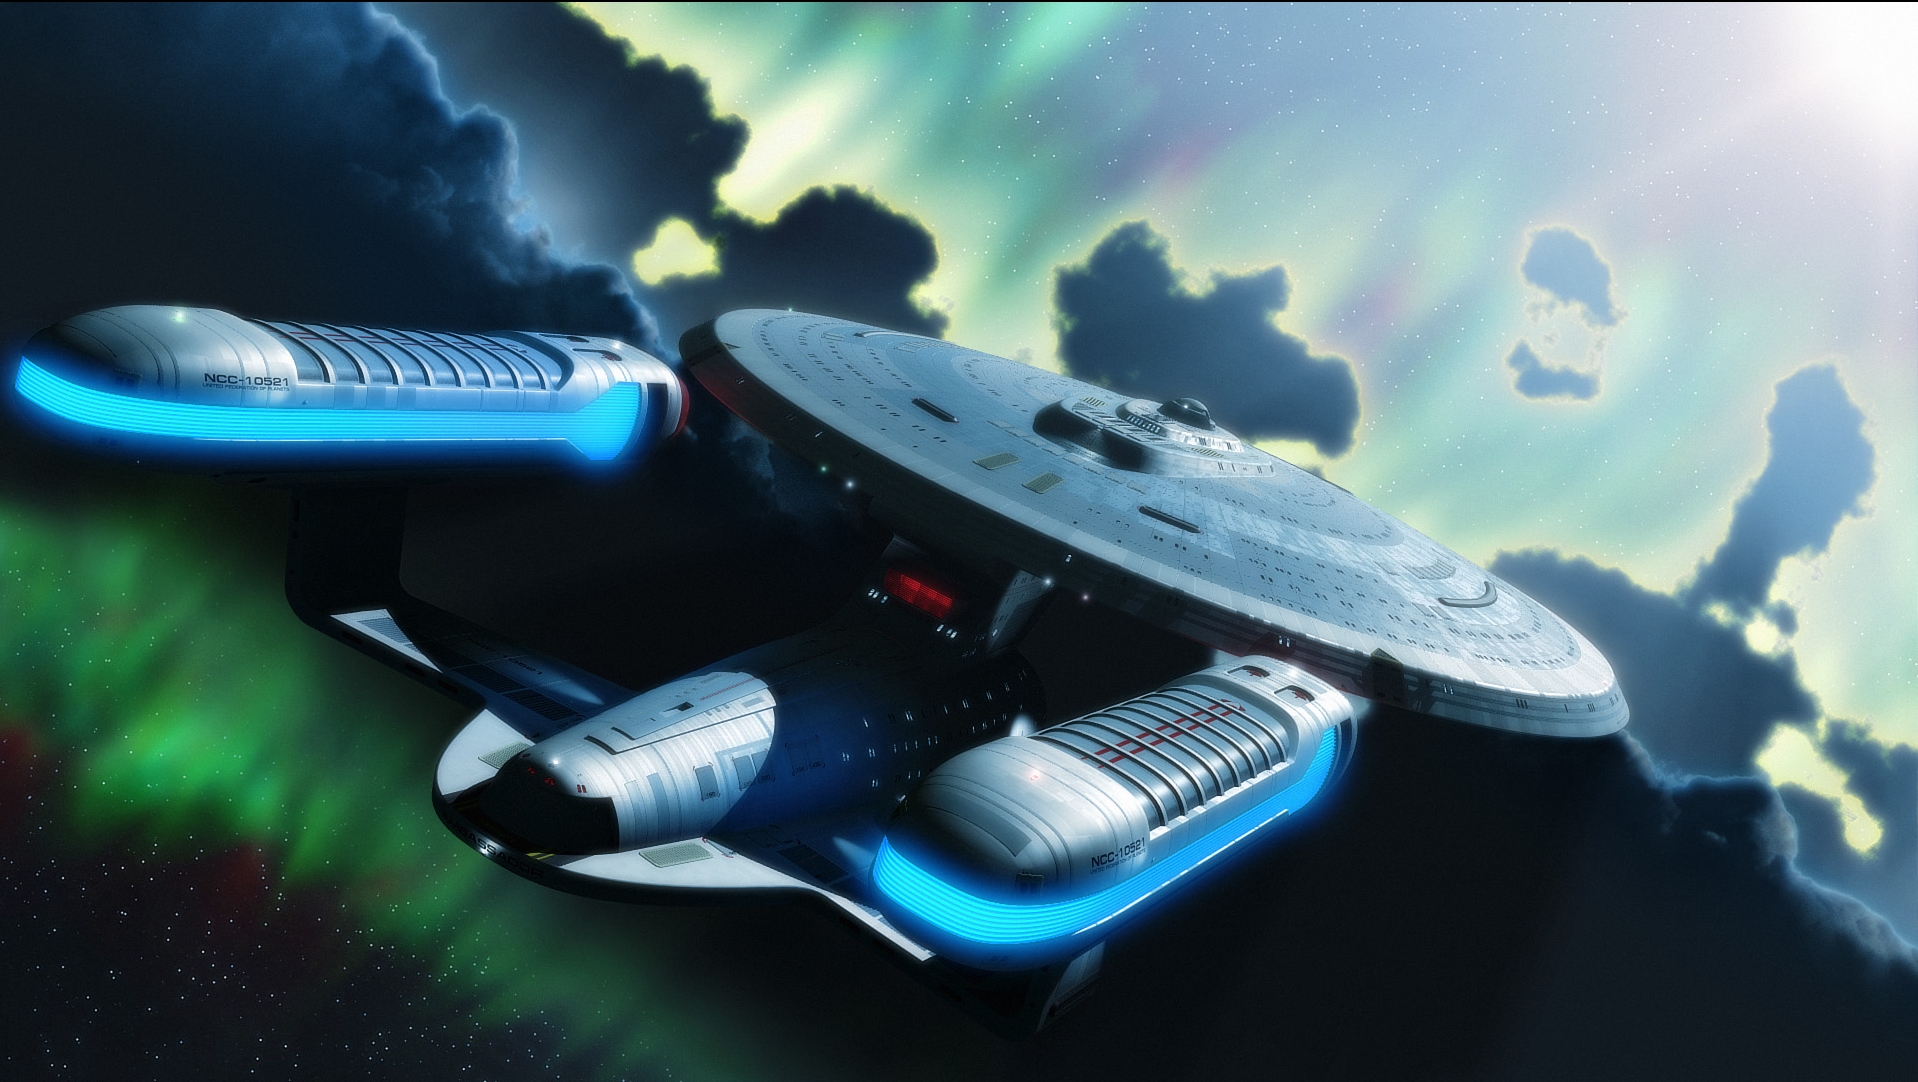 enterprise (star trek), star trek, sci fi, spaceship, starship